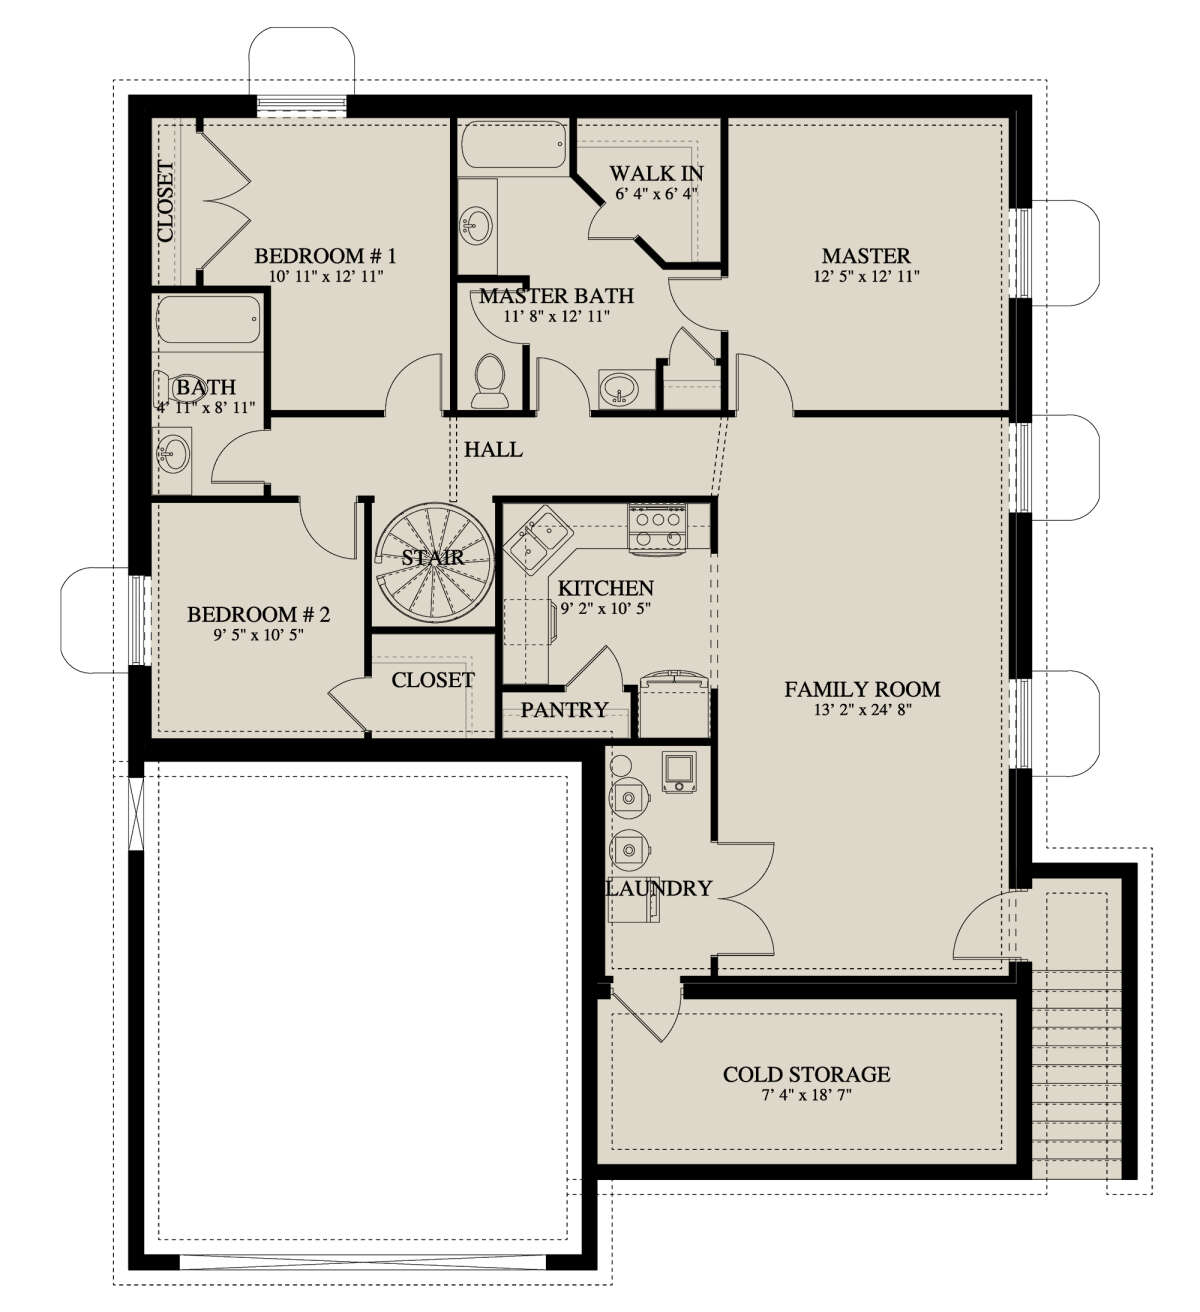 Basement for House Plan #2802-00110